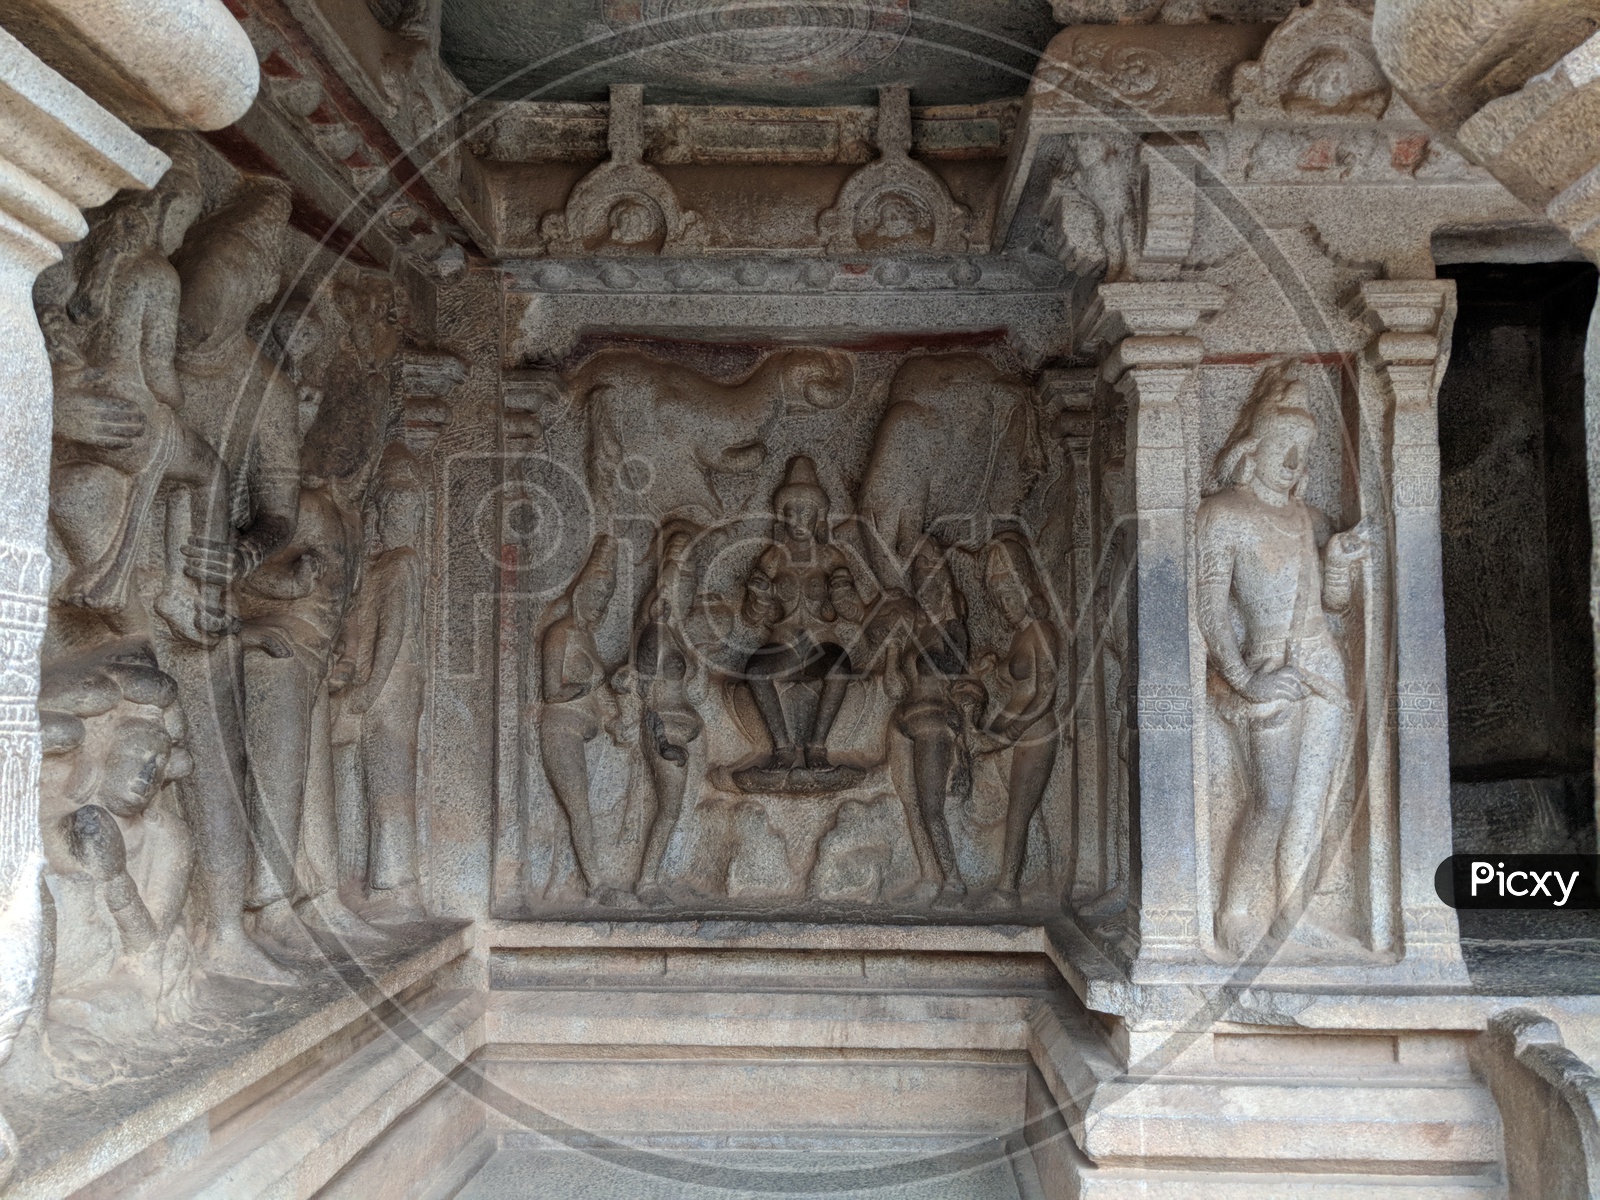 Stone Carvings in a Temple in Mahabalipuram